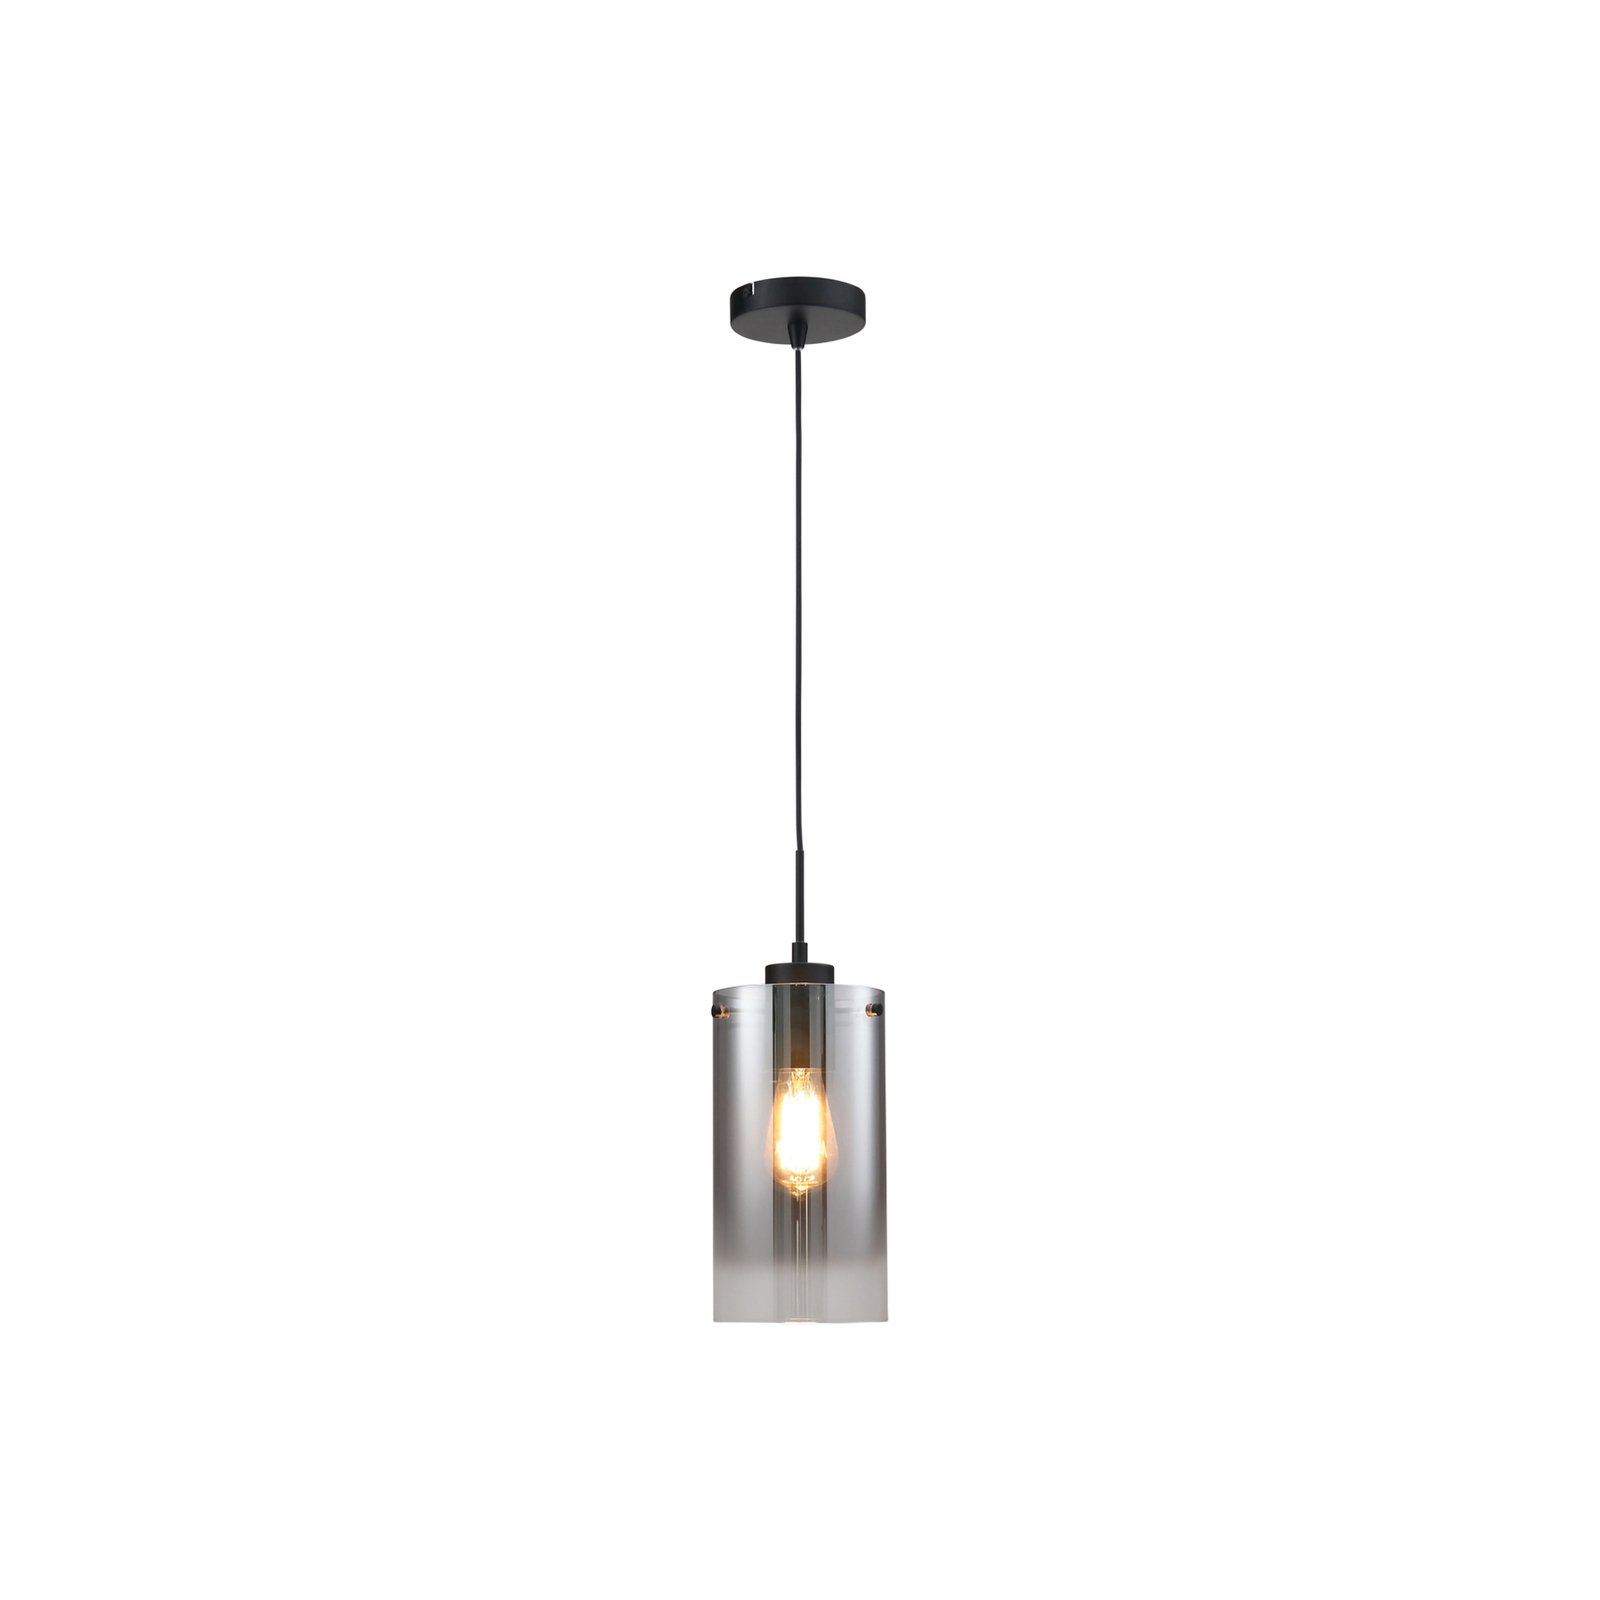 Ventotto hanglamp, zwart/rook, Ø 15 cm, glas